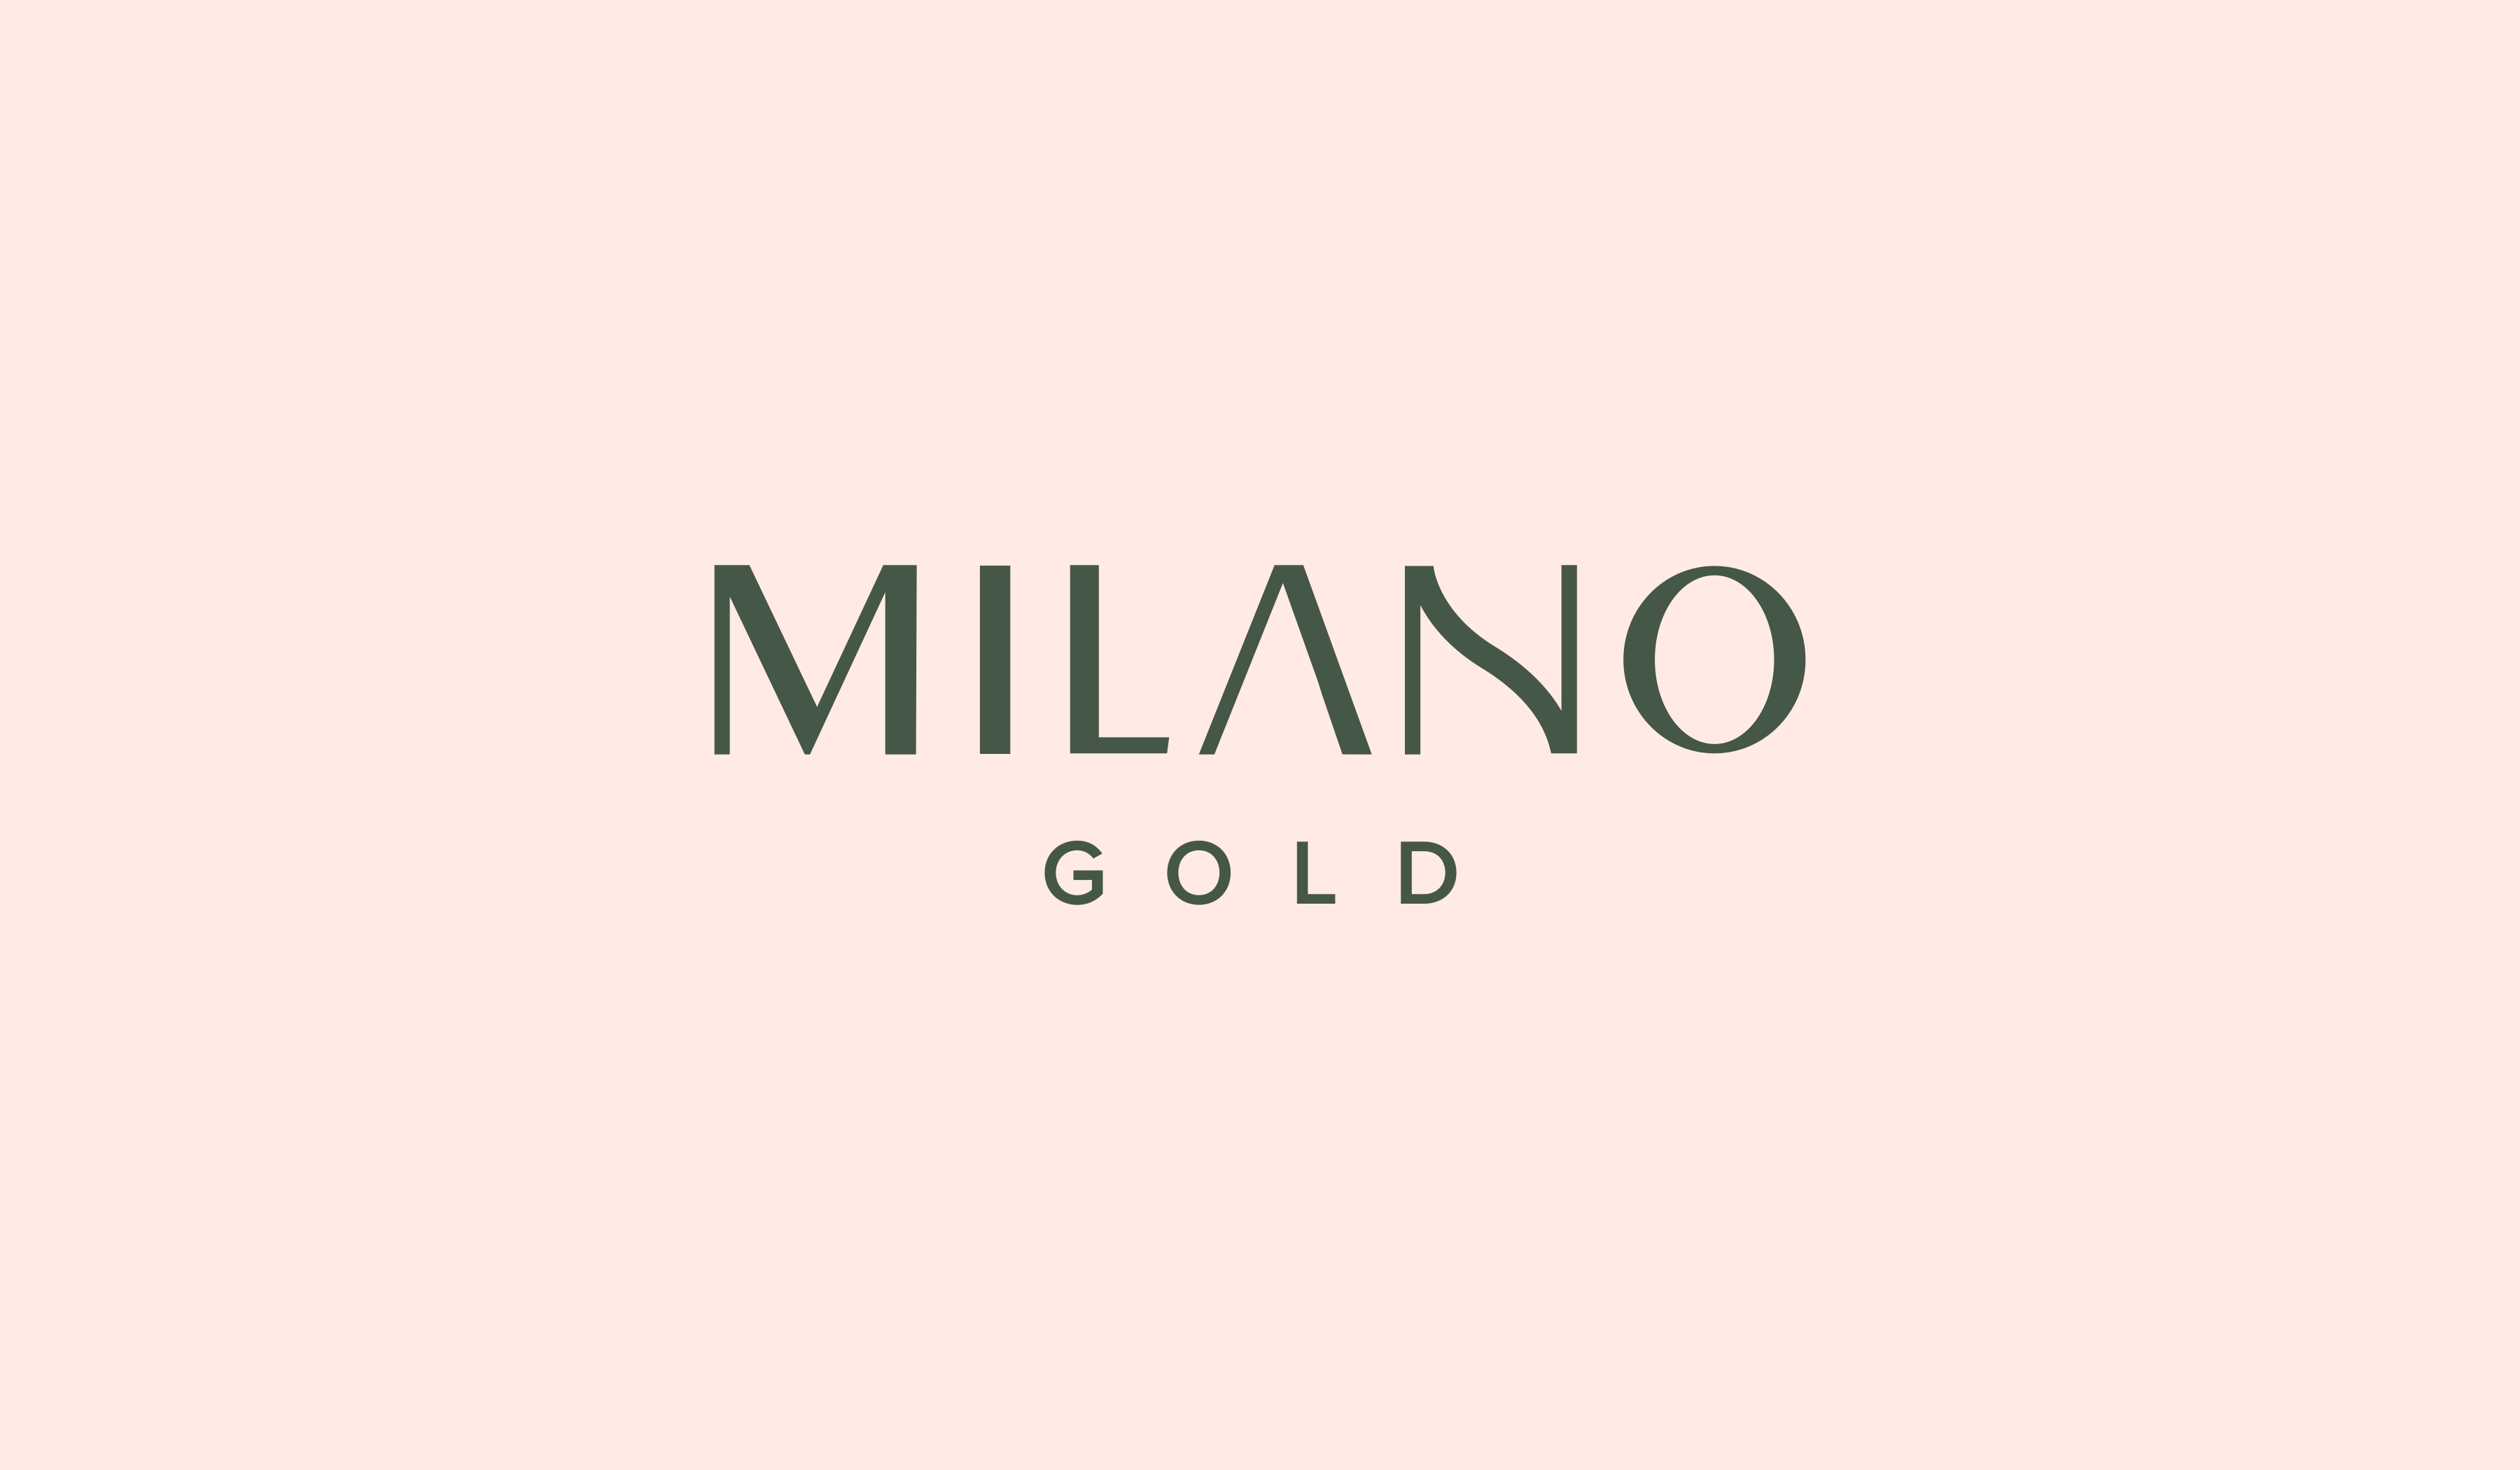 MILANO GOLD